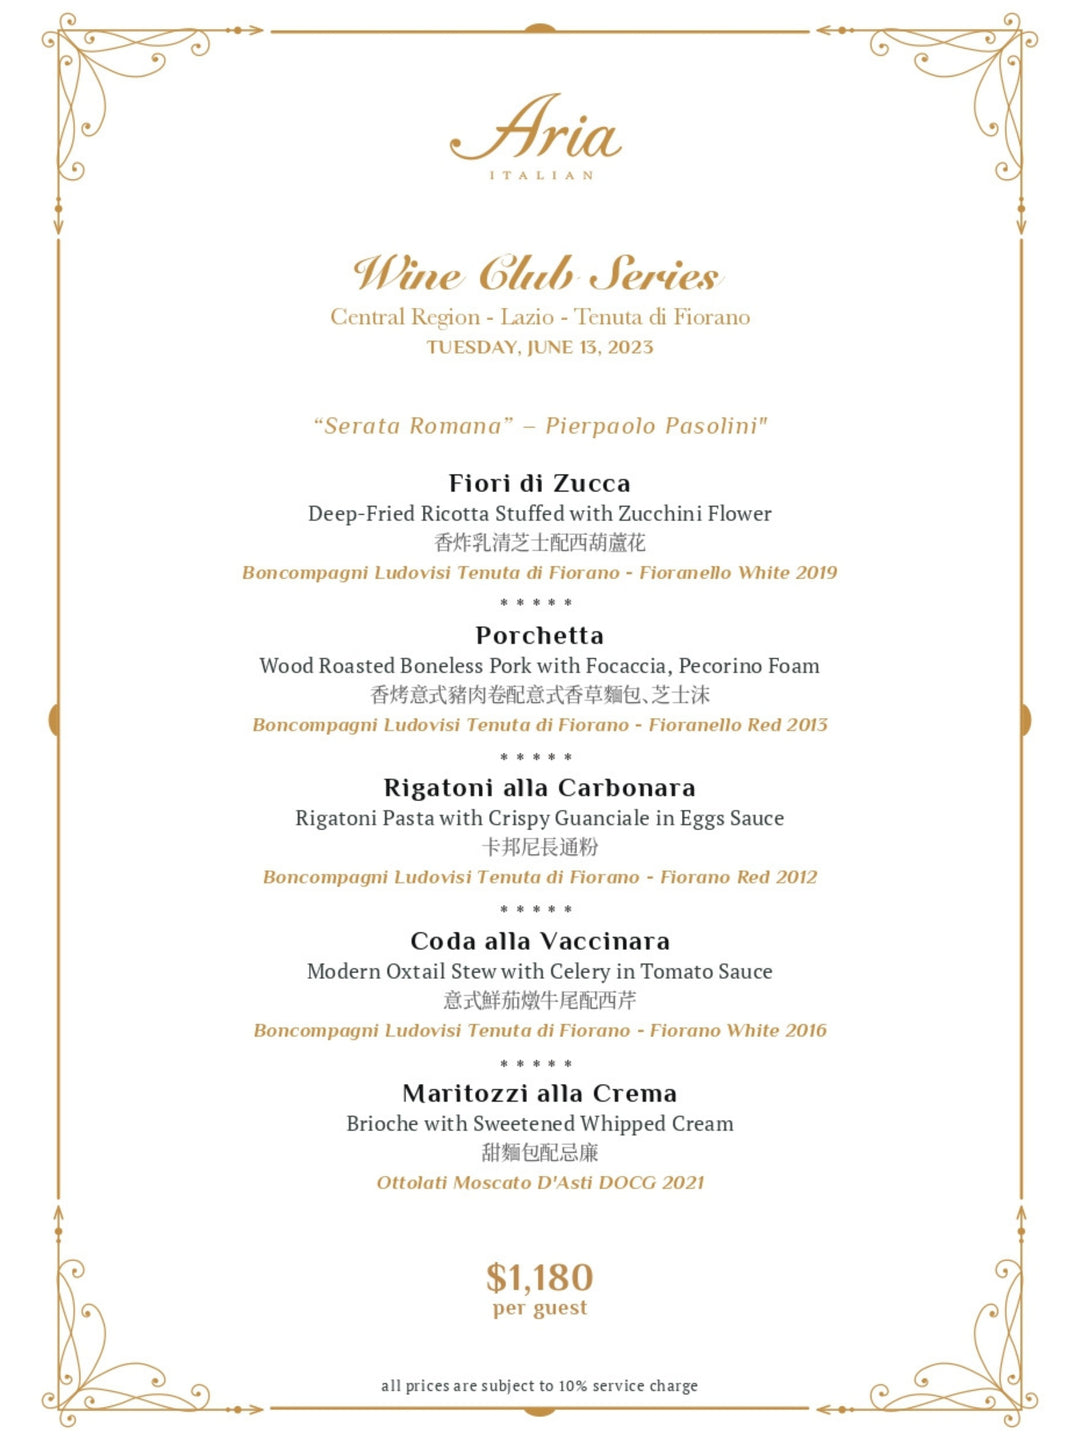 Aria Wine Club Series - Central Italy - Lazio Wine Dinner